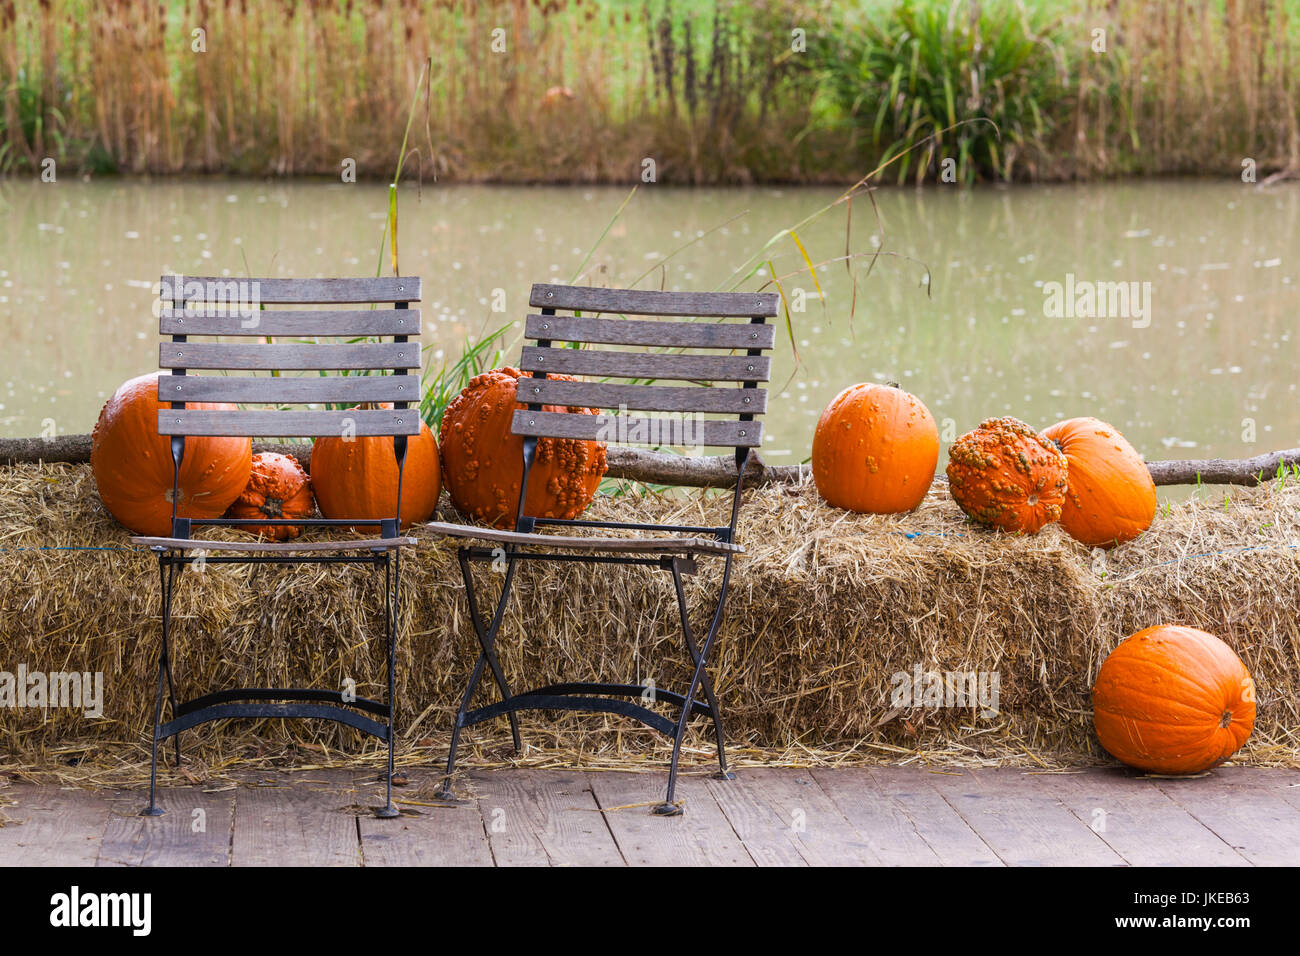 Germany, Baden-Wuerttemberg, Ludwigsburg, Bluehendes Barock Gardens, fall festival, pumpkins Stock Photo